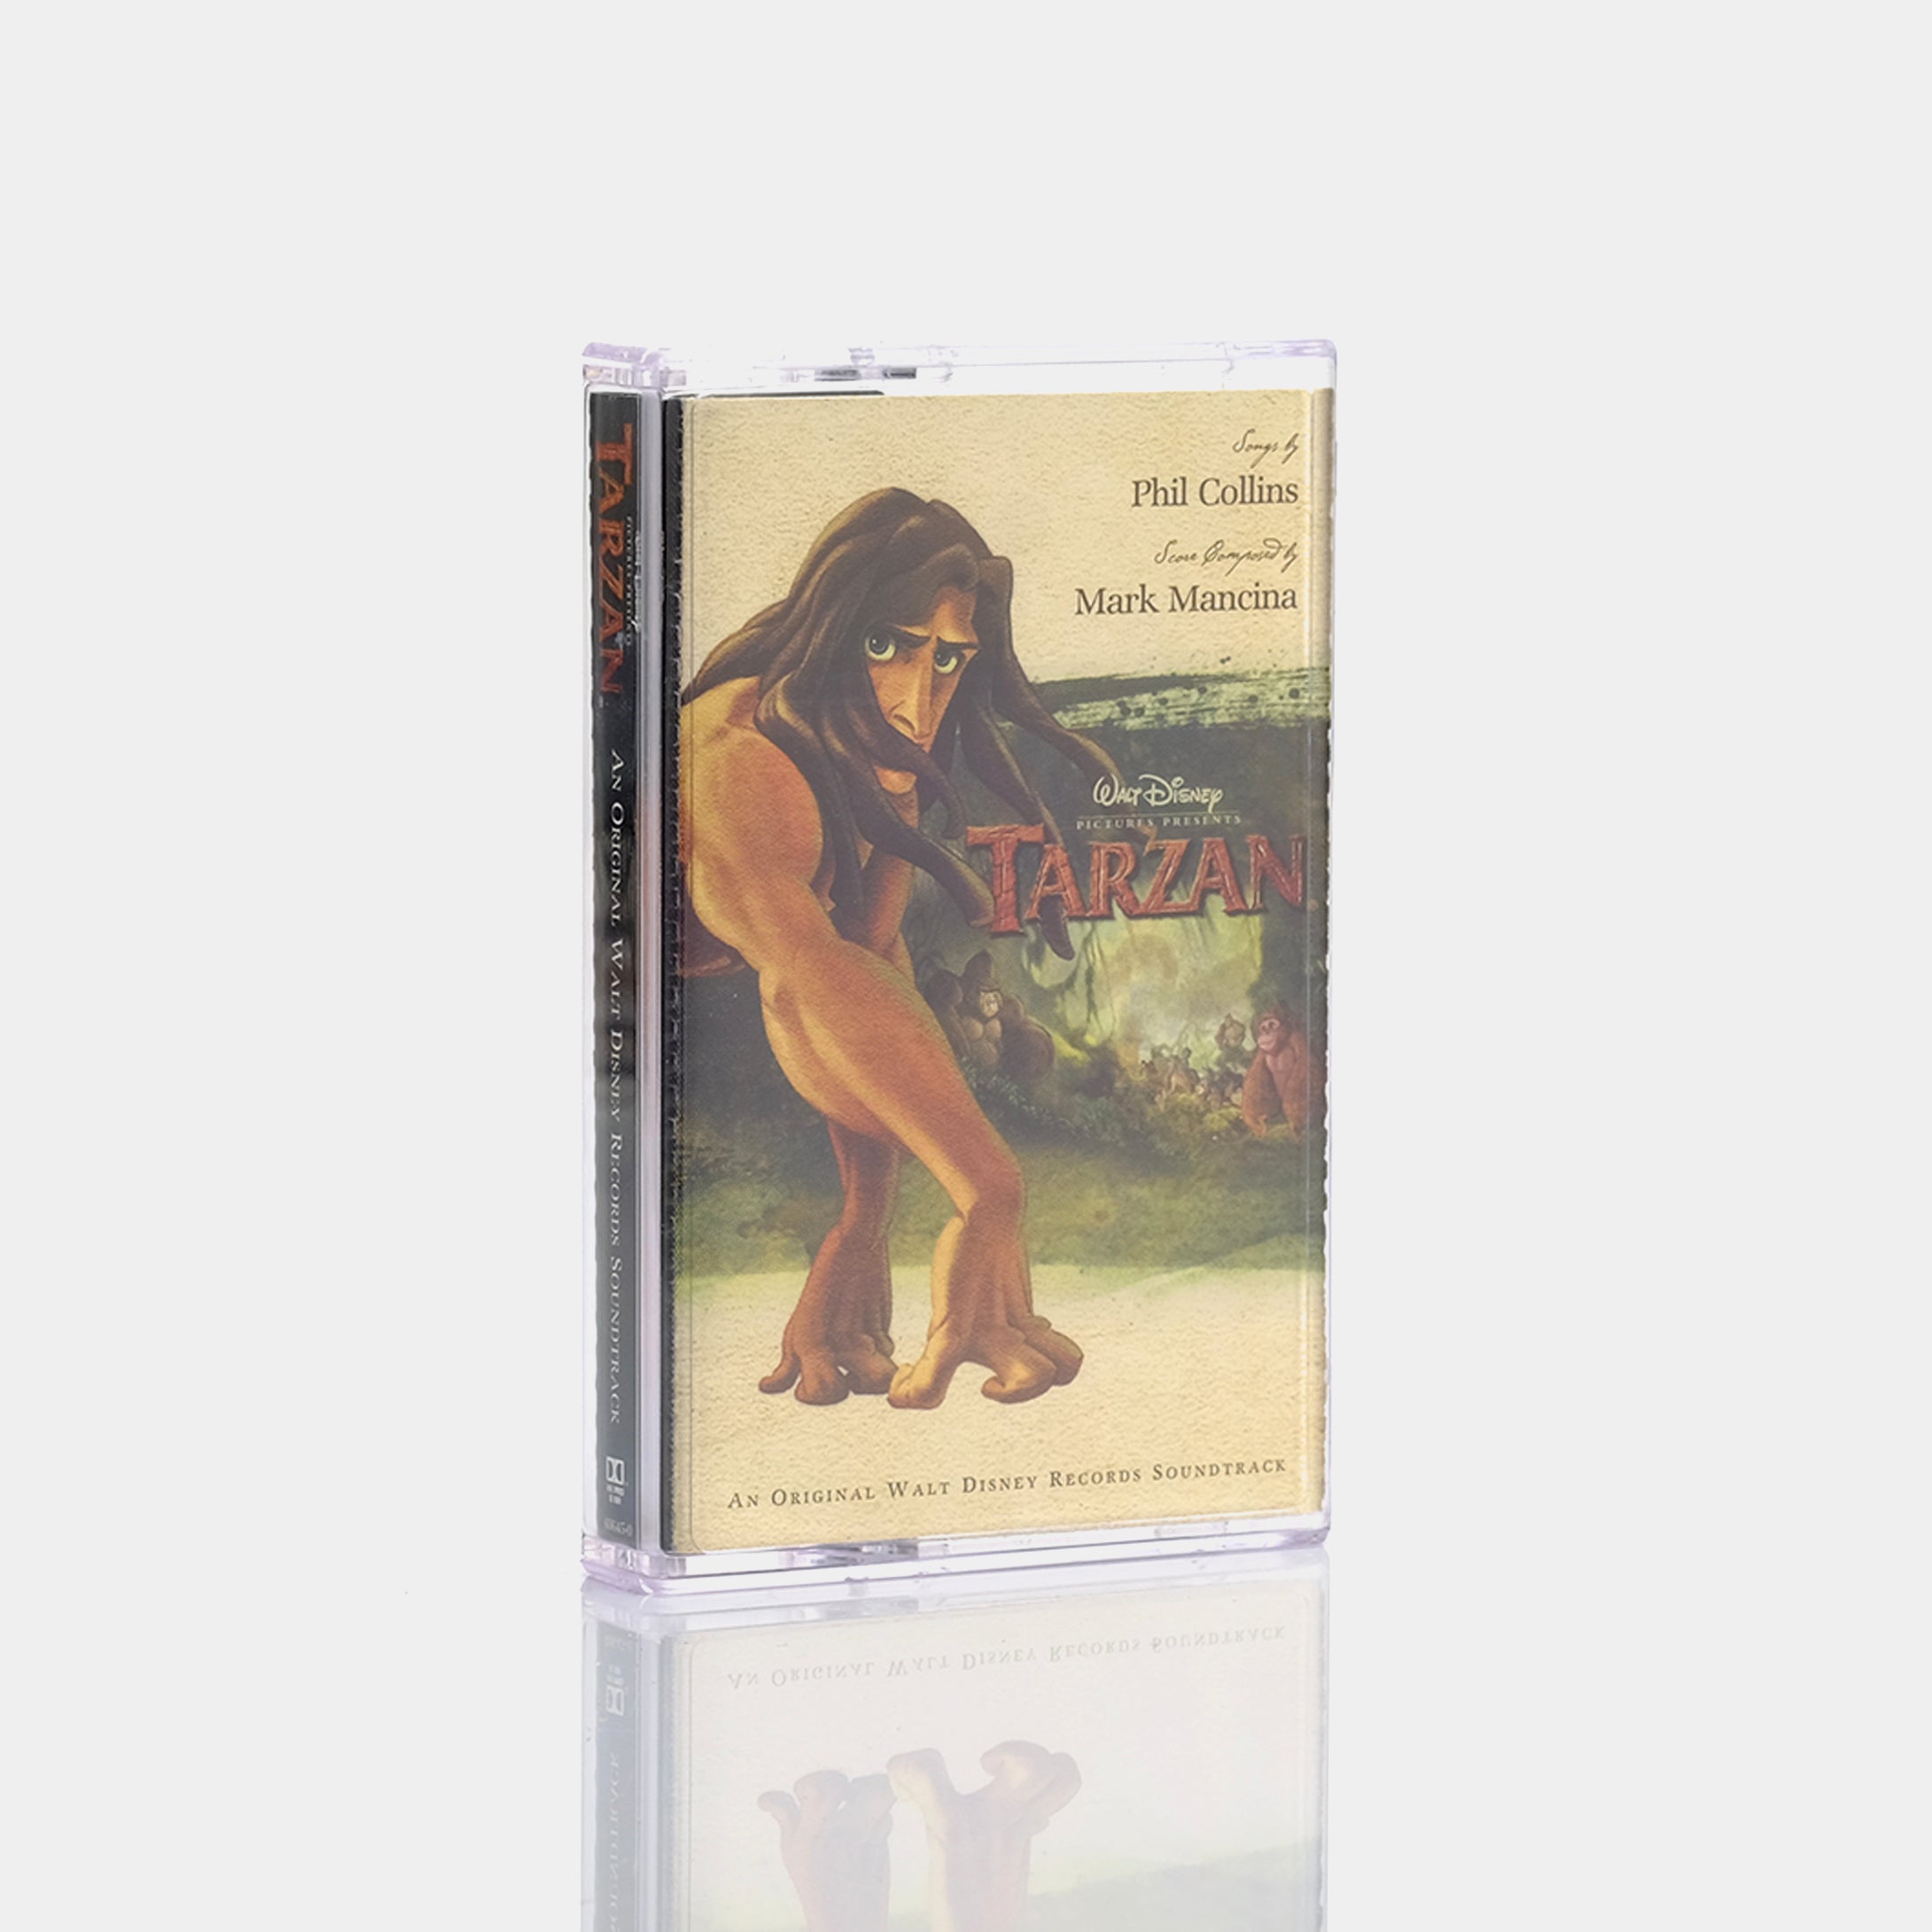 Disney - Tarzan (Original Motion Picture Soundtrack) Cassette Tape